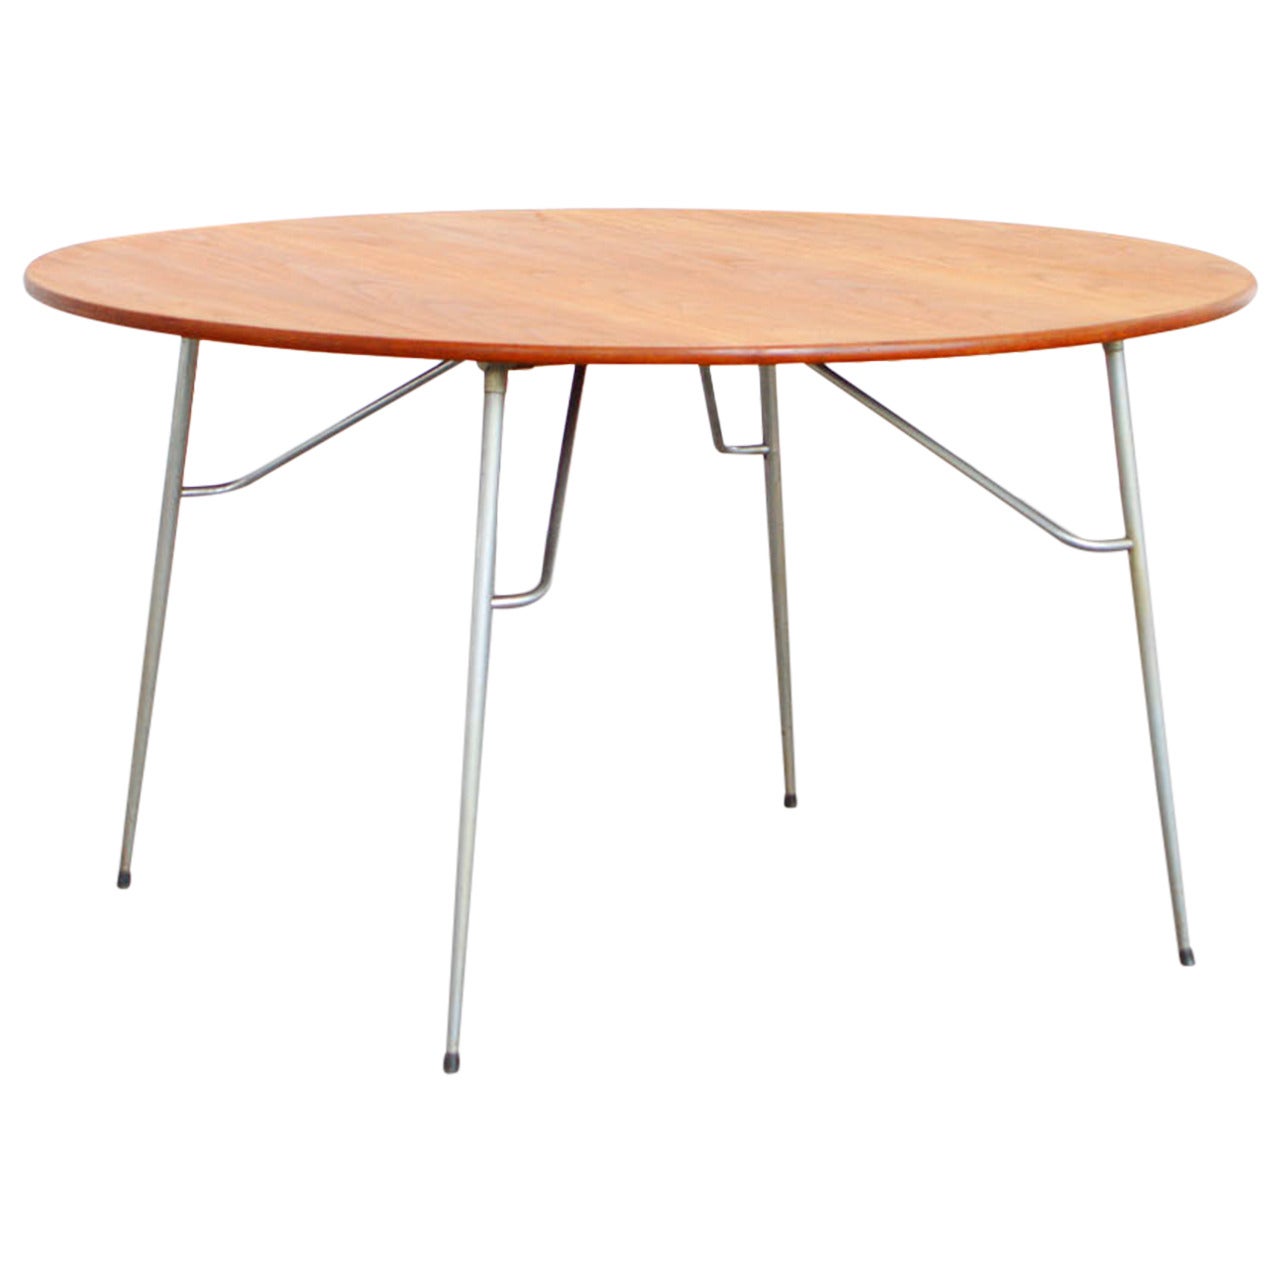 Børge Mogensen Teak & Stainless Steel Round Dining Table For Sale